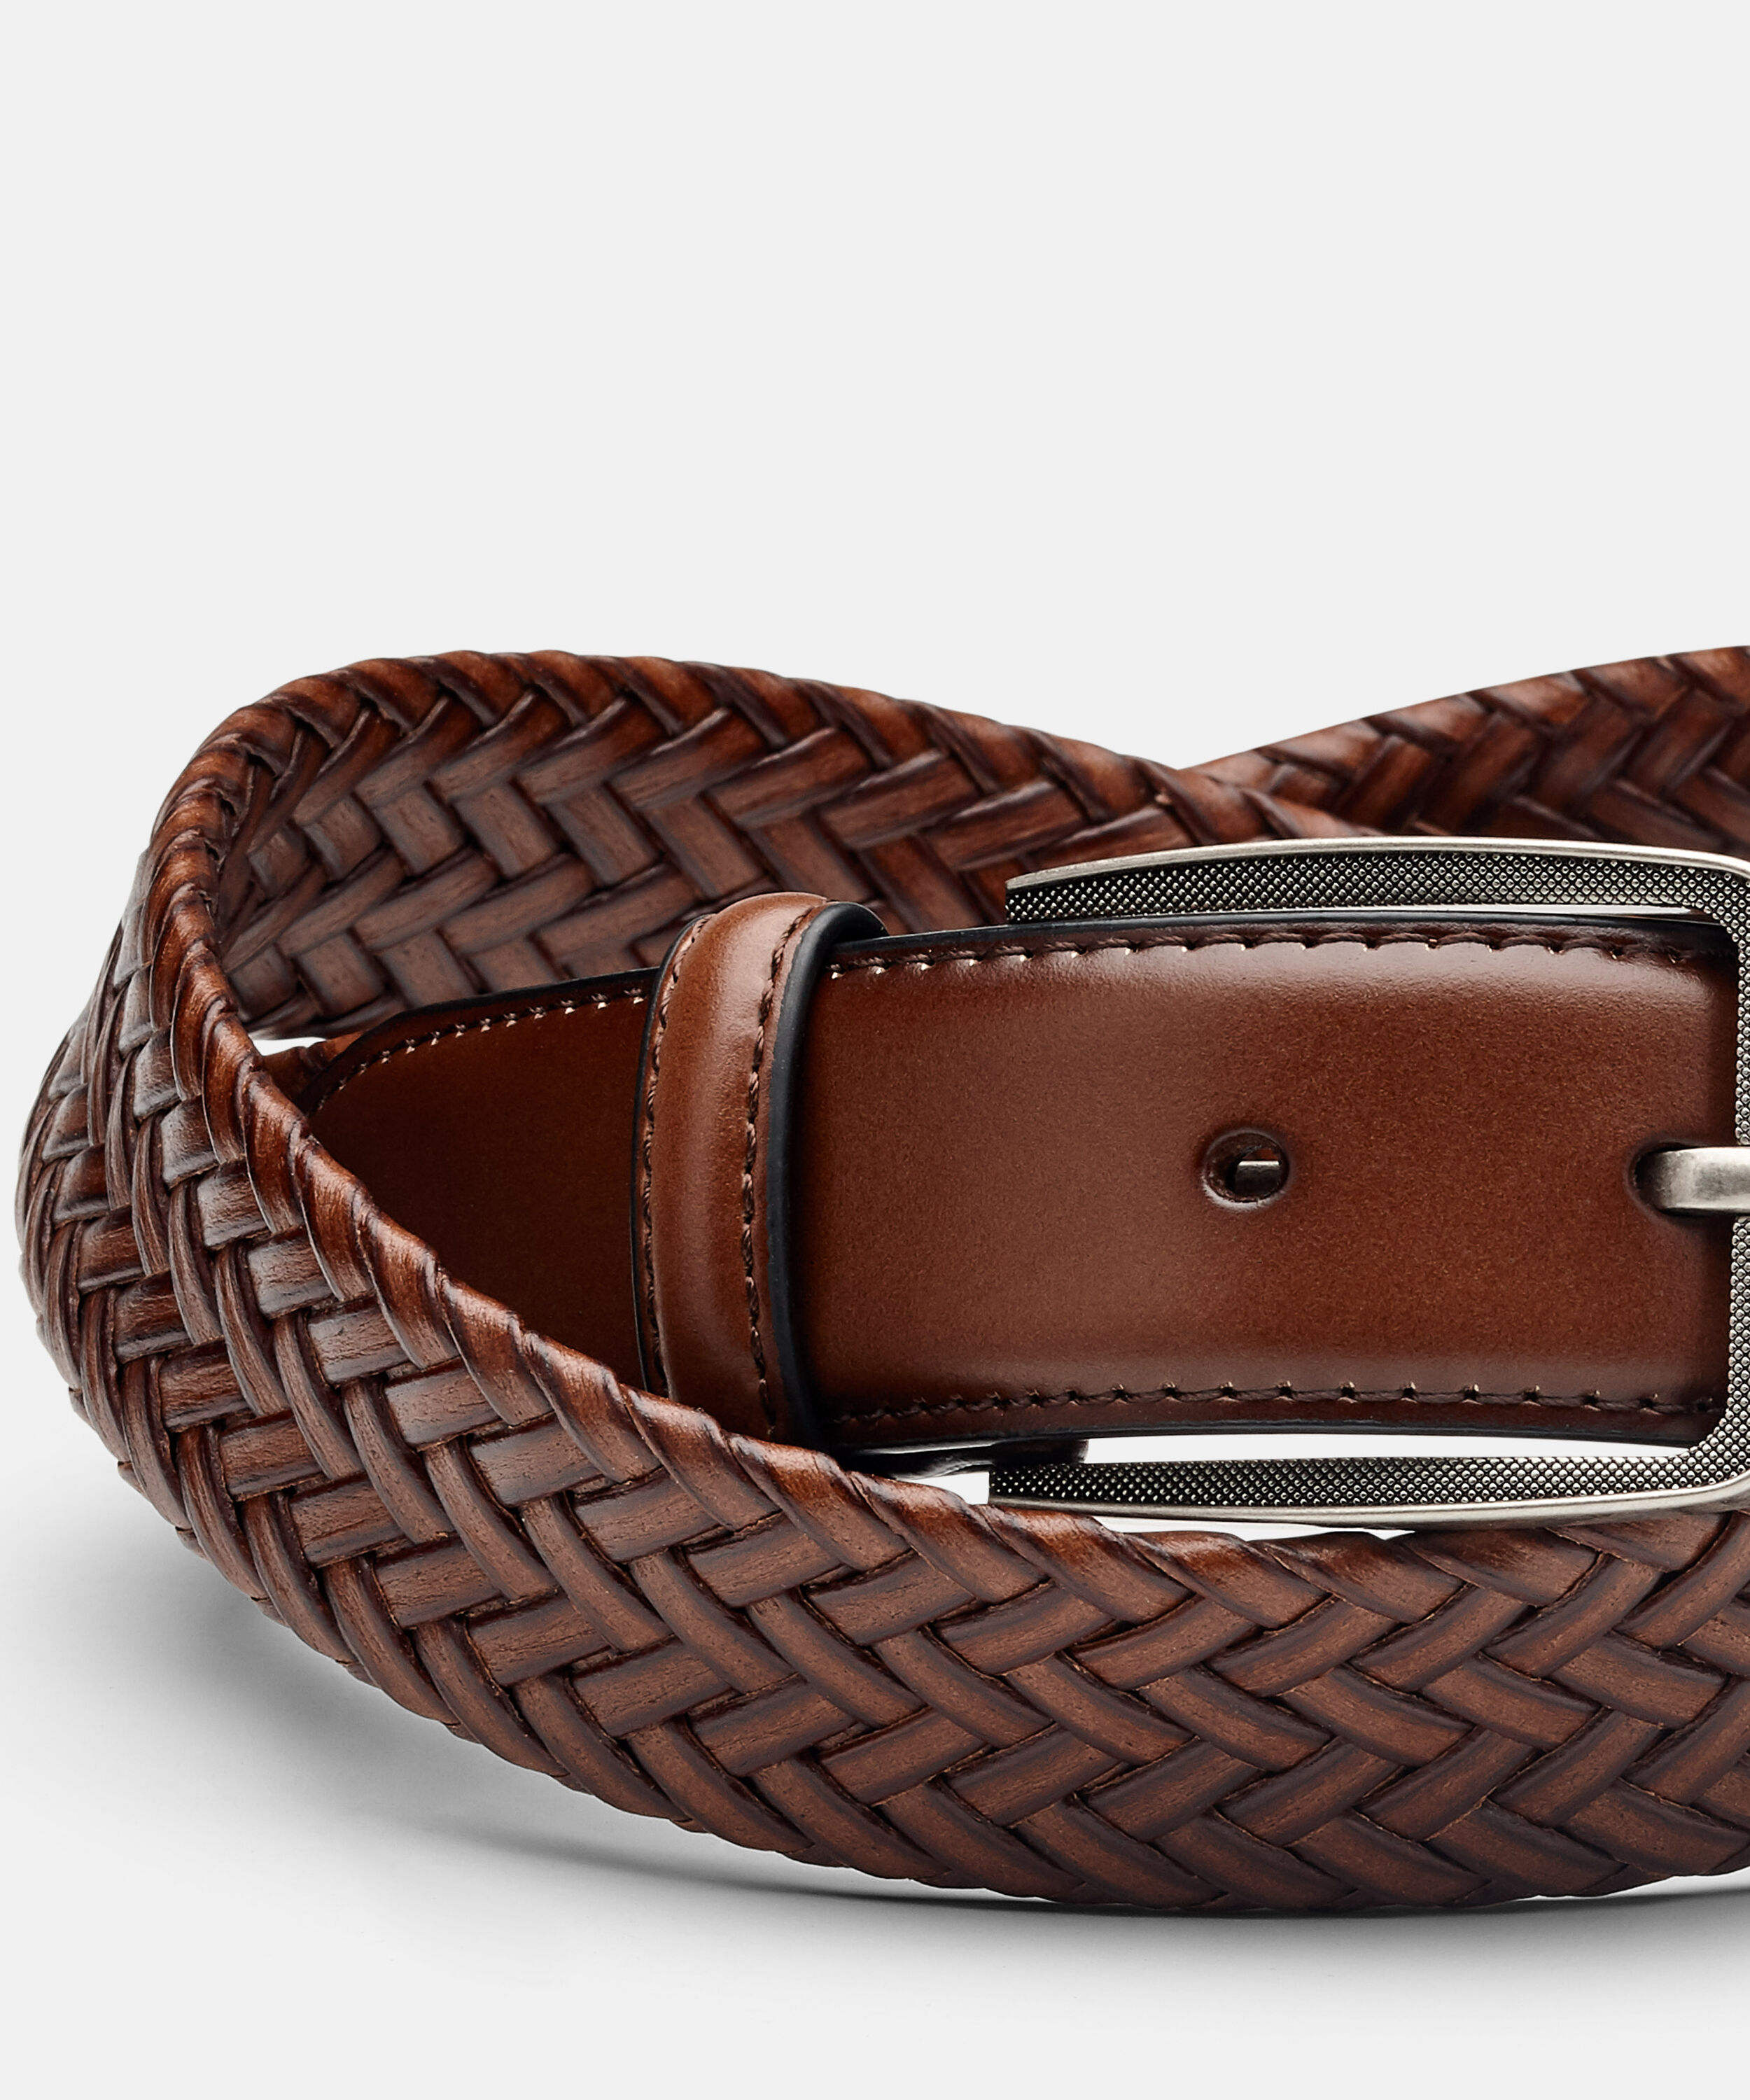 Darron - Tan - Woven Leather Belt Texture Buckle, Belts